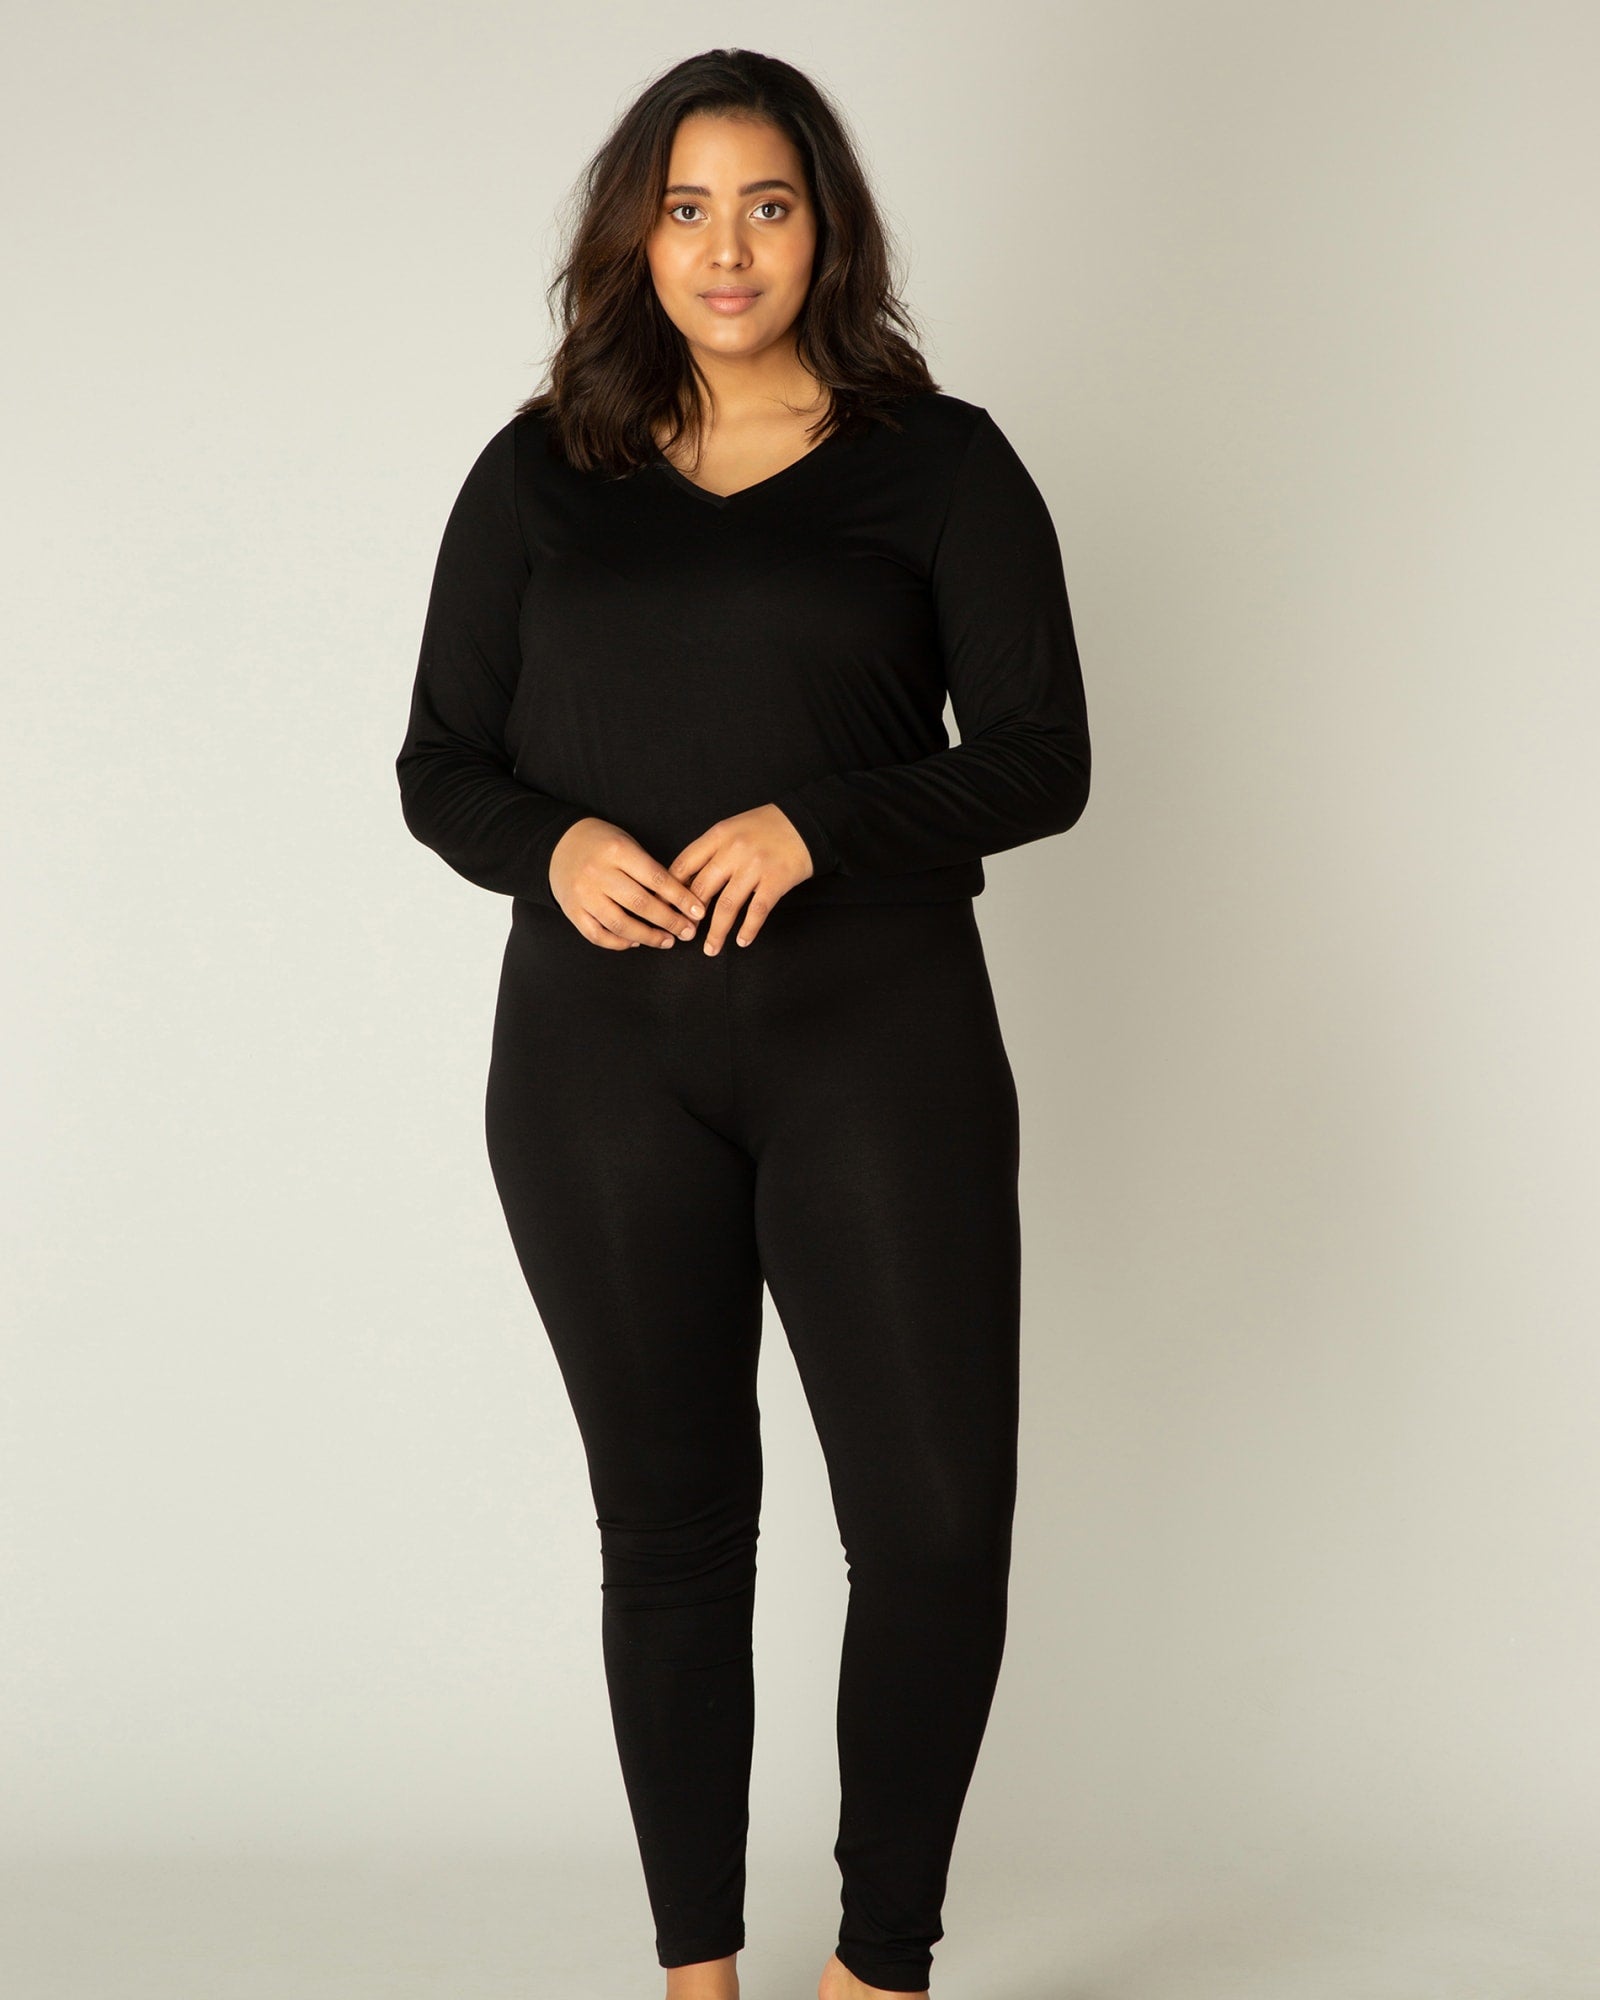 Torrid Sexy Black Premium Long Sleeve Catsuit Plus Size 4X, 26